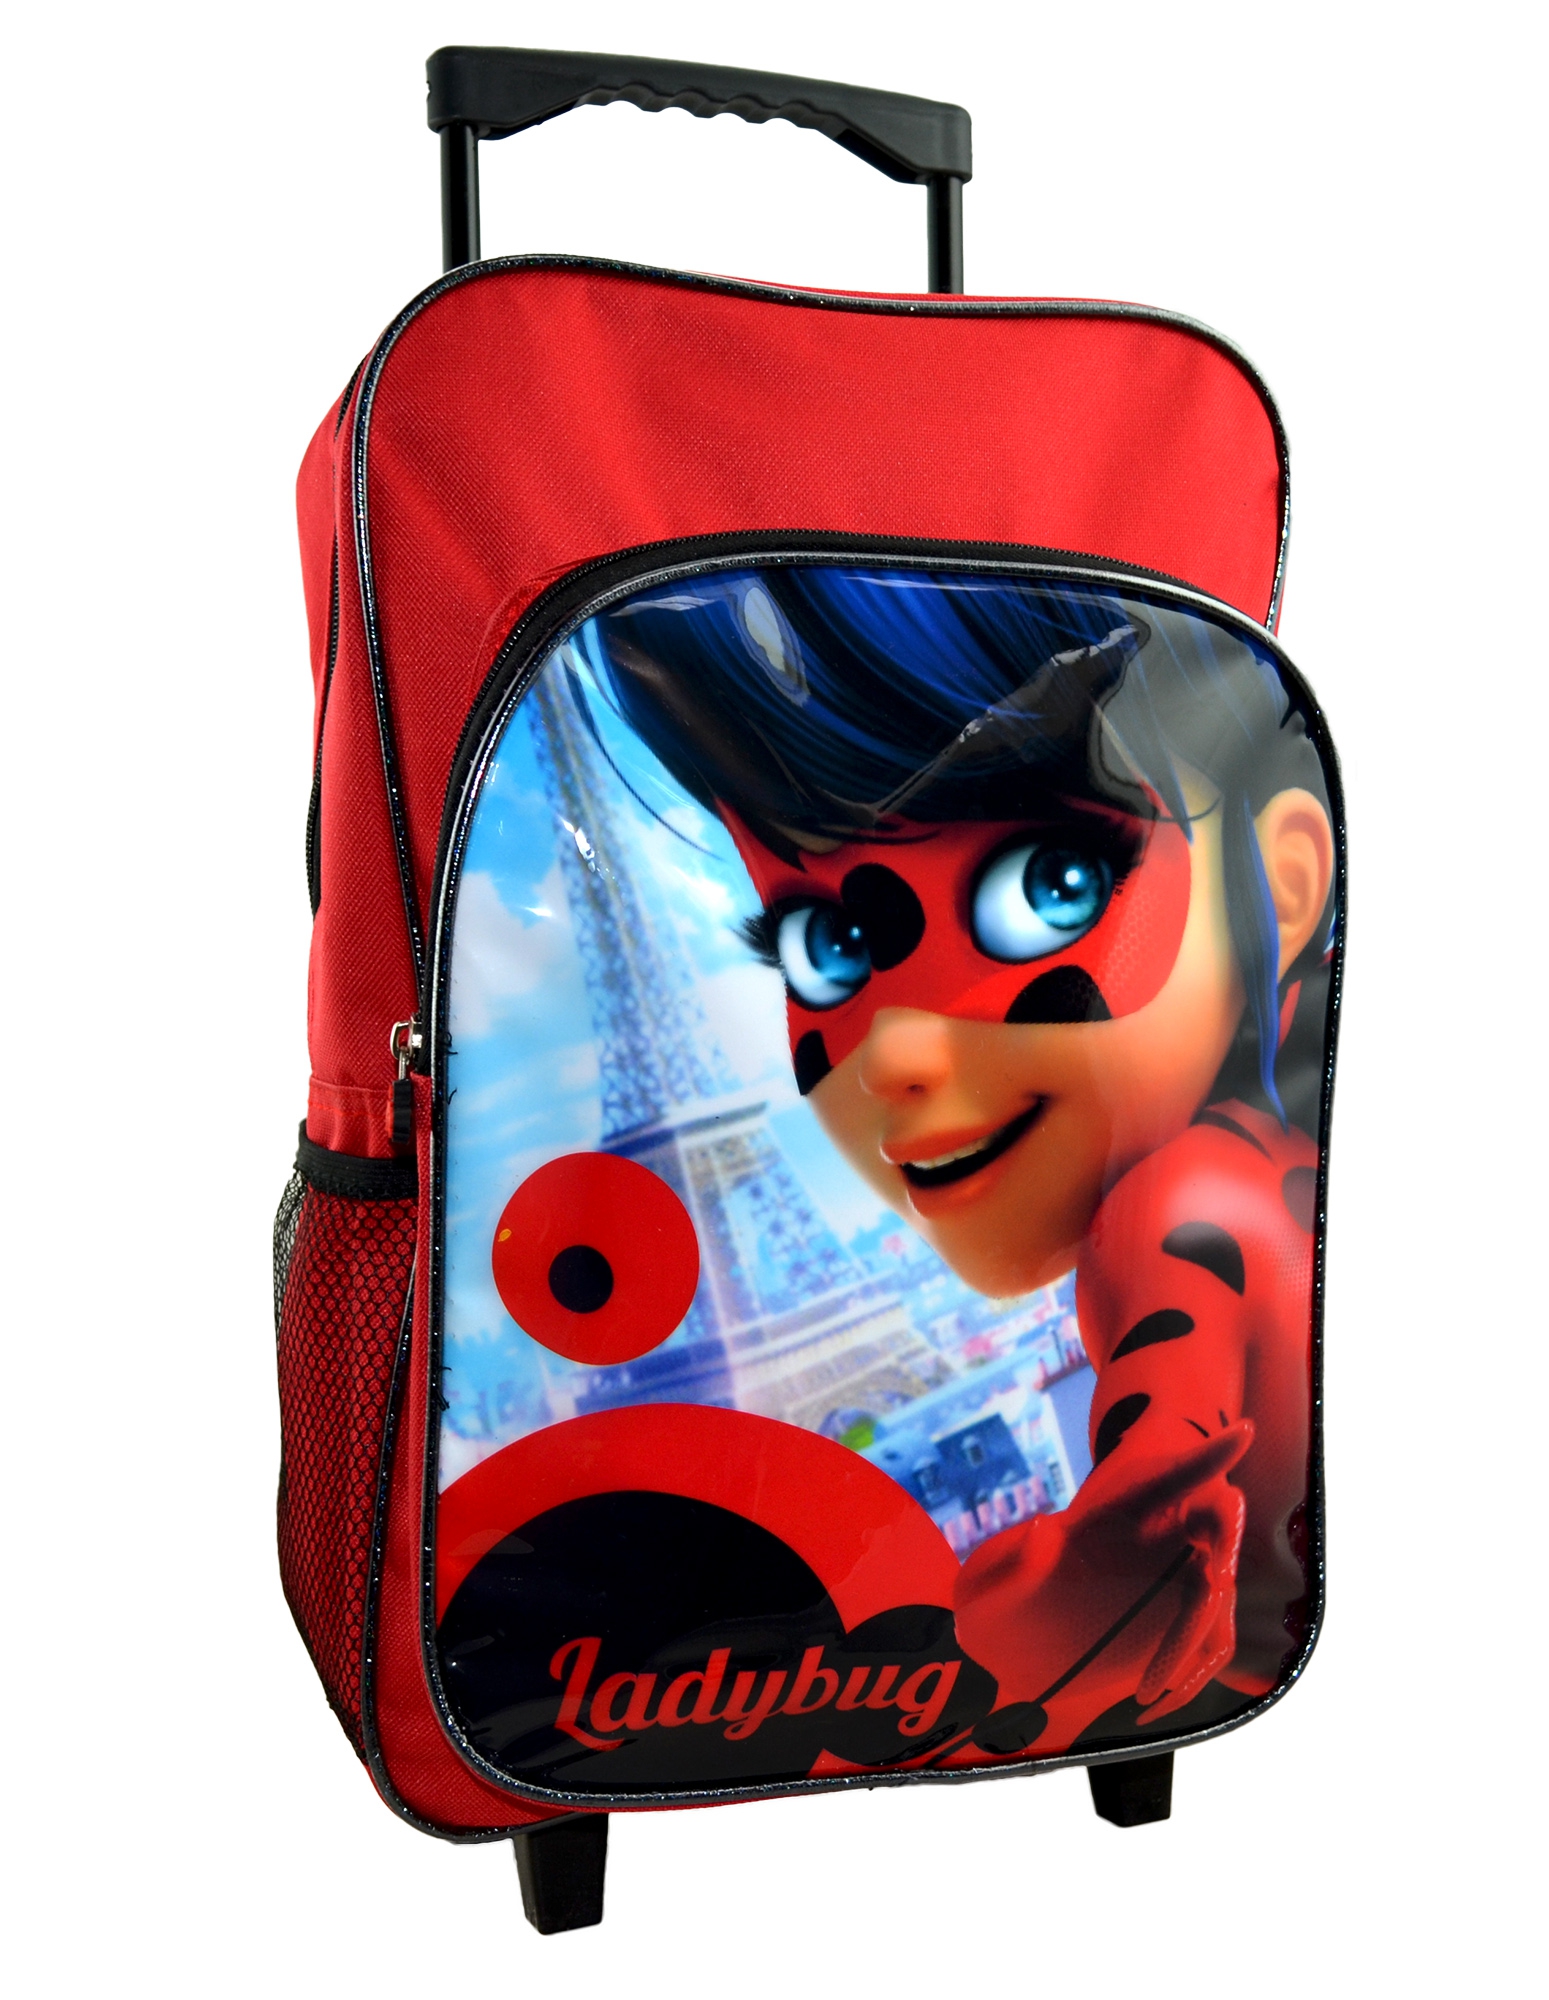 Miraculous 'Ladybug' School Travel Trolley Roller Wheeled Bag